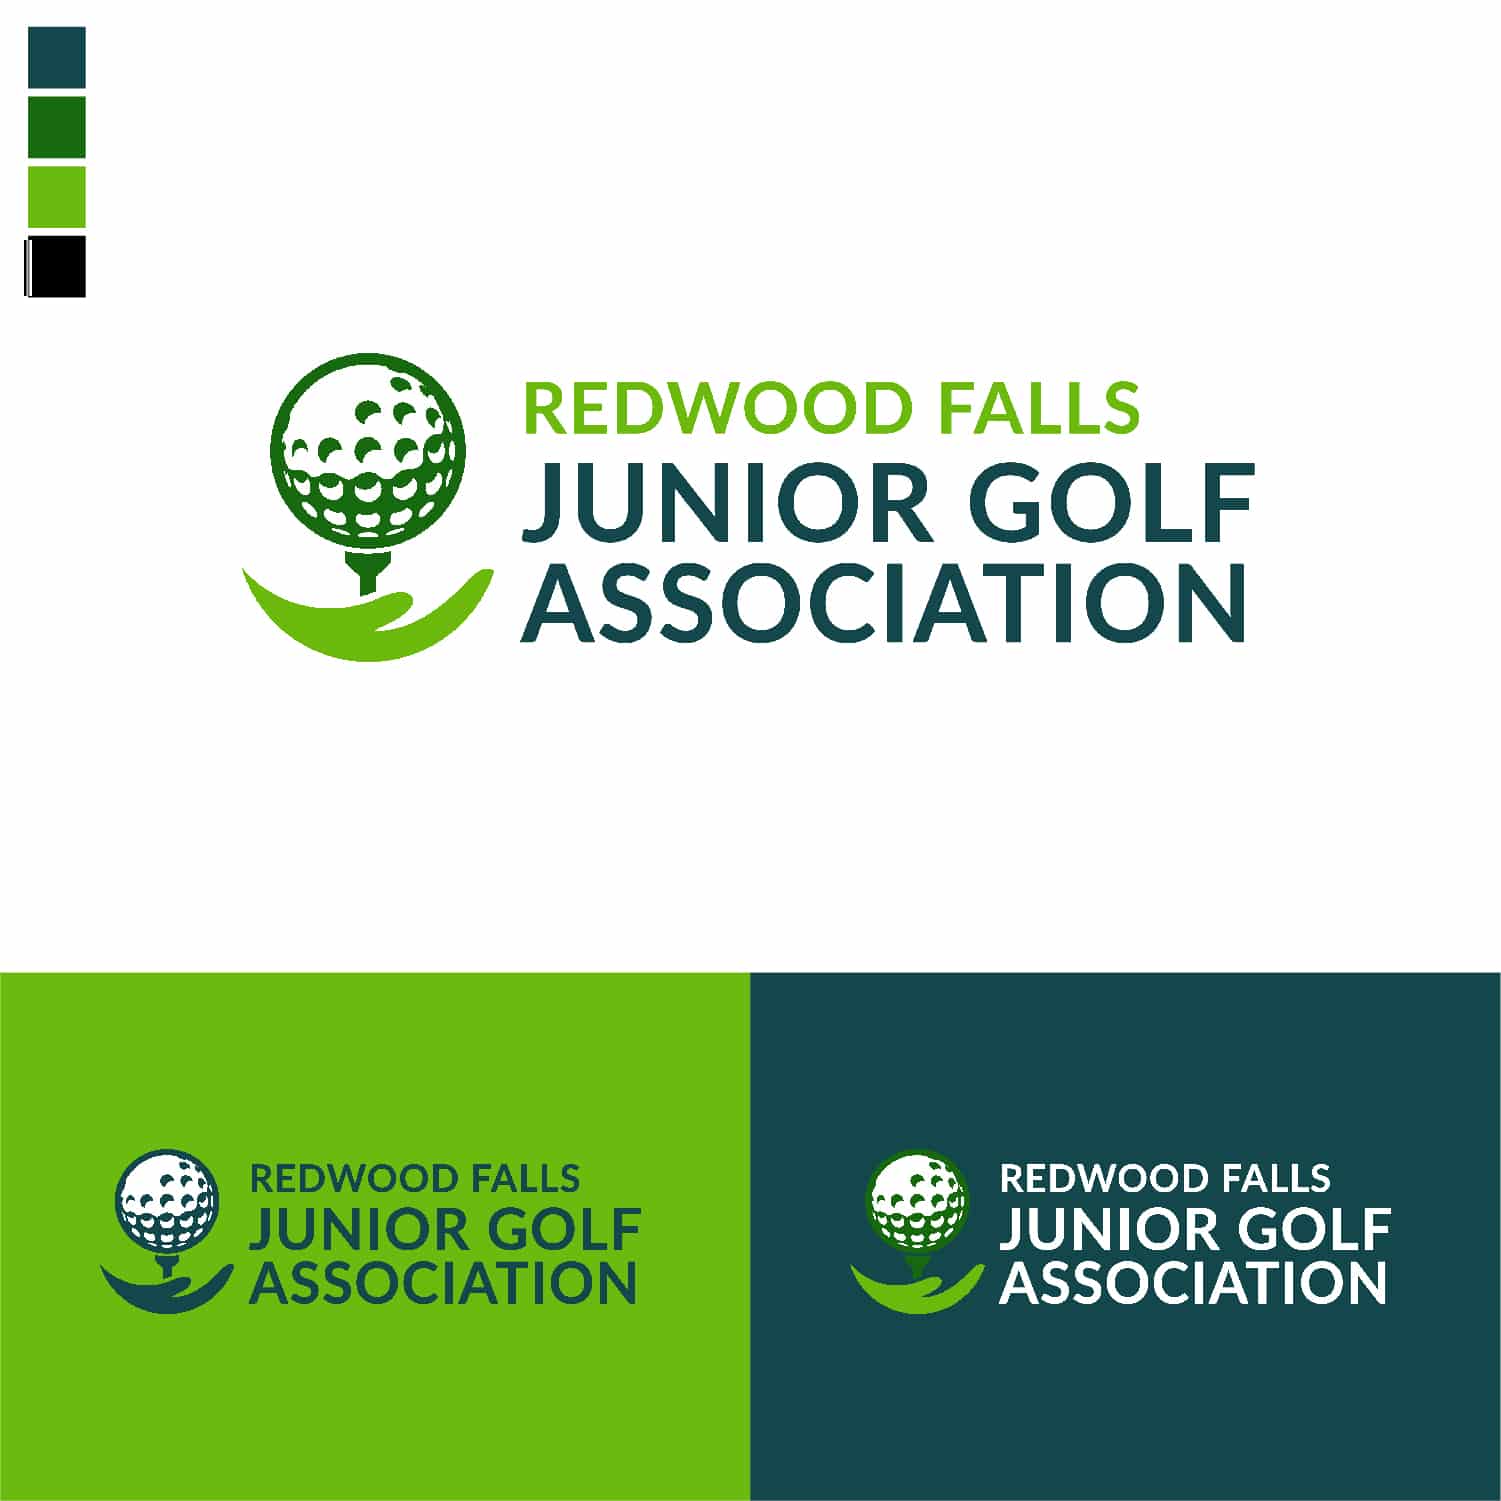 Redwood Falls Junior Golf Association Logo